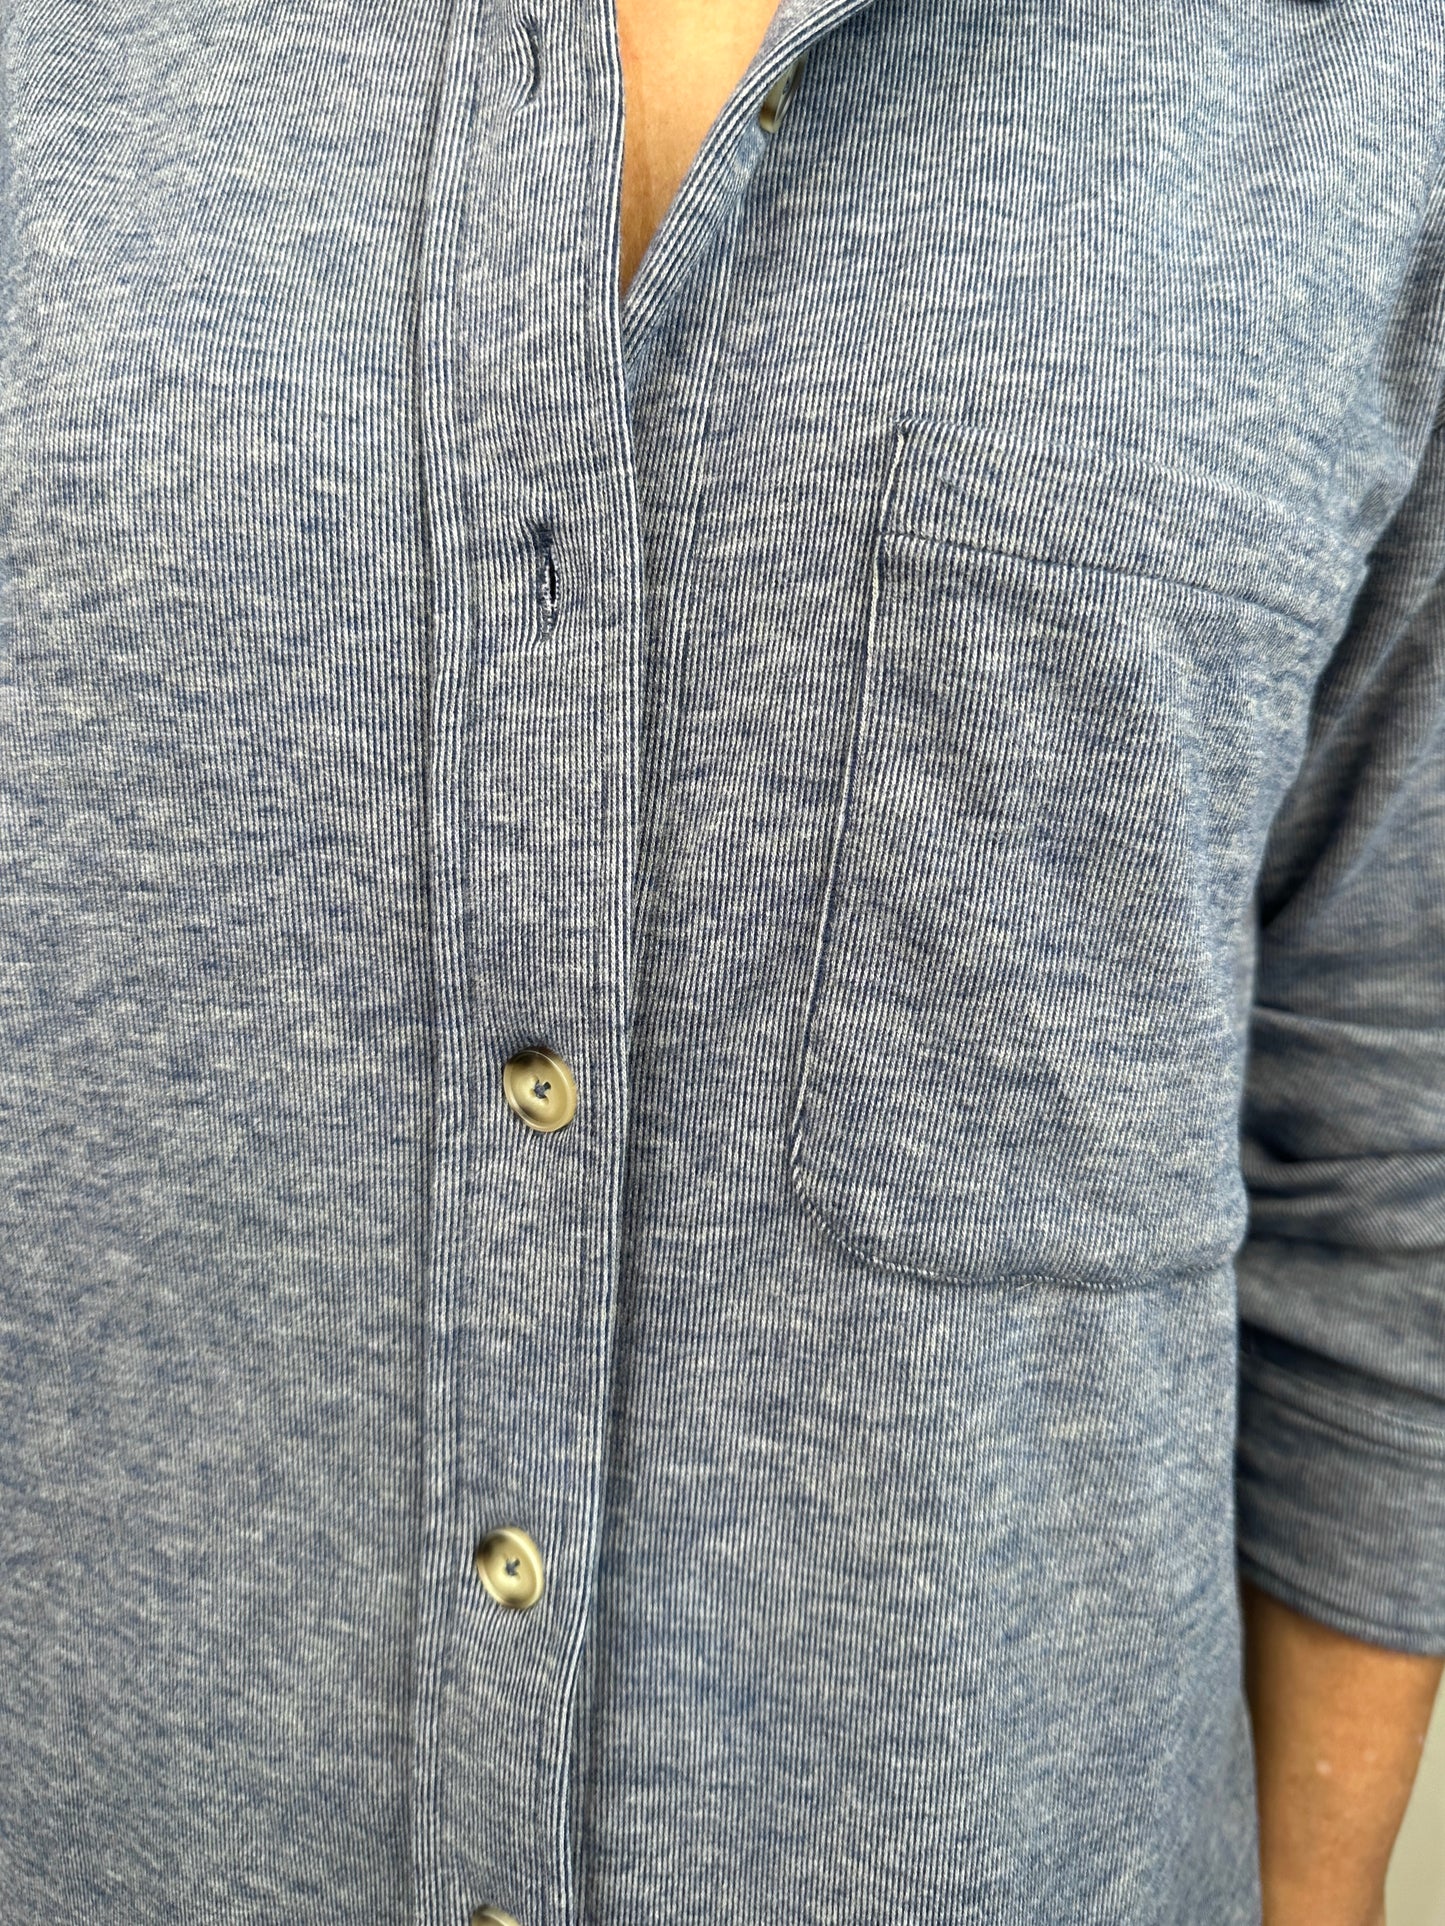 Bobi Button Front Collar Shirt Jacket in Blue